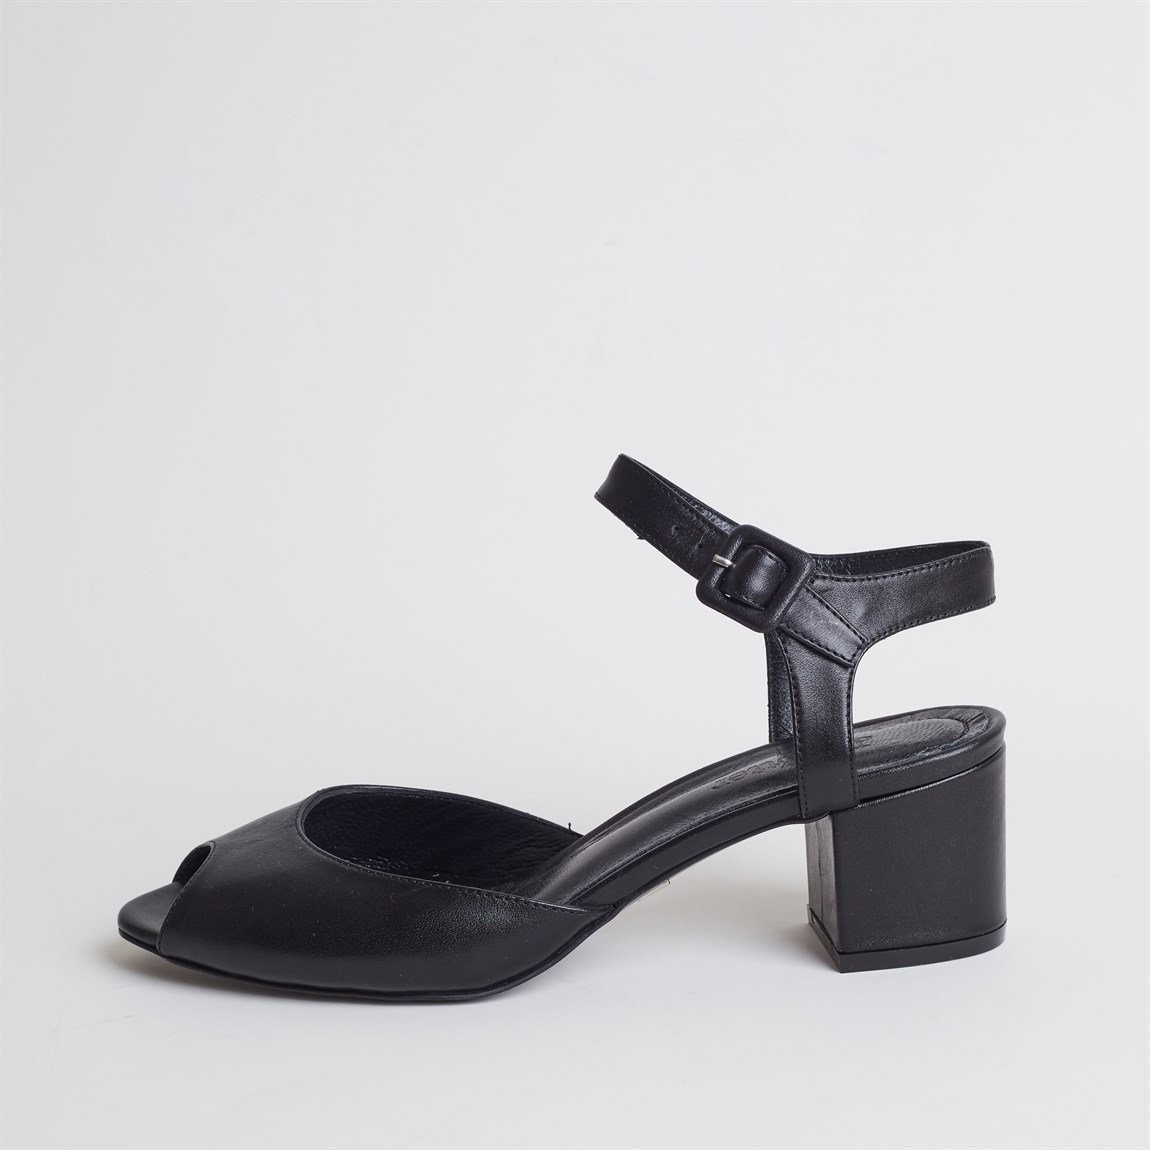 Jabotter Alanis Black Leather Sandals